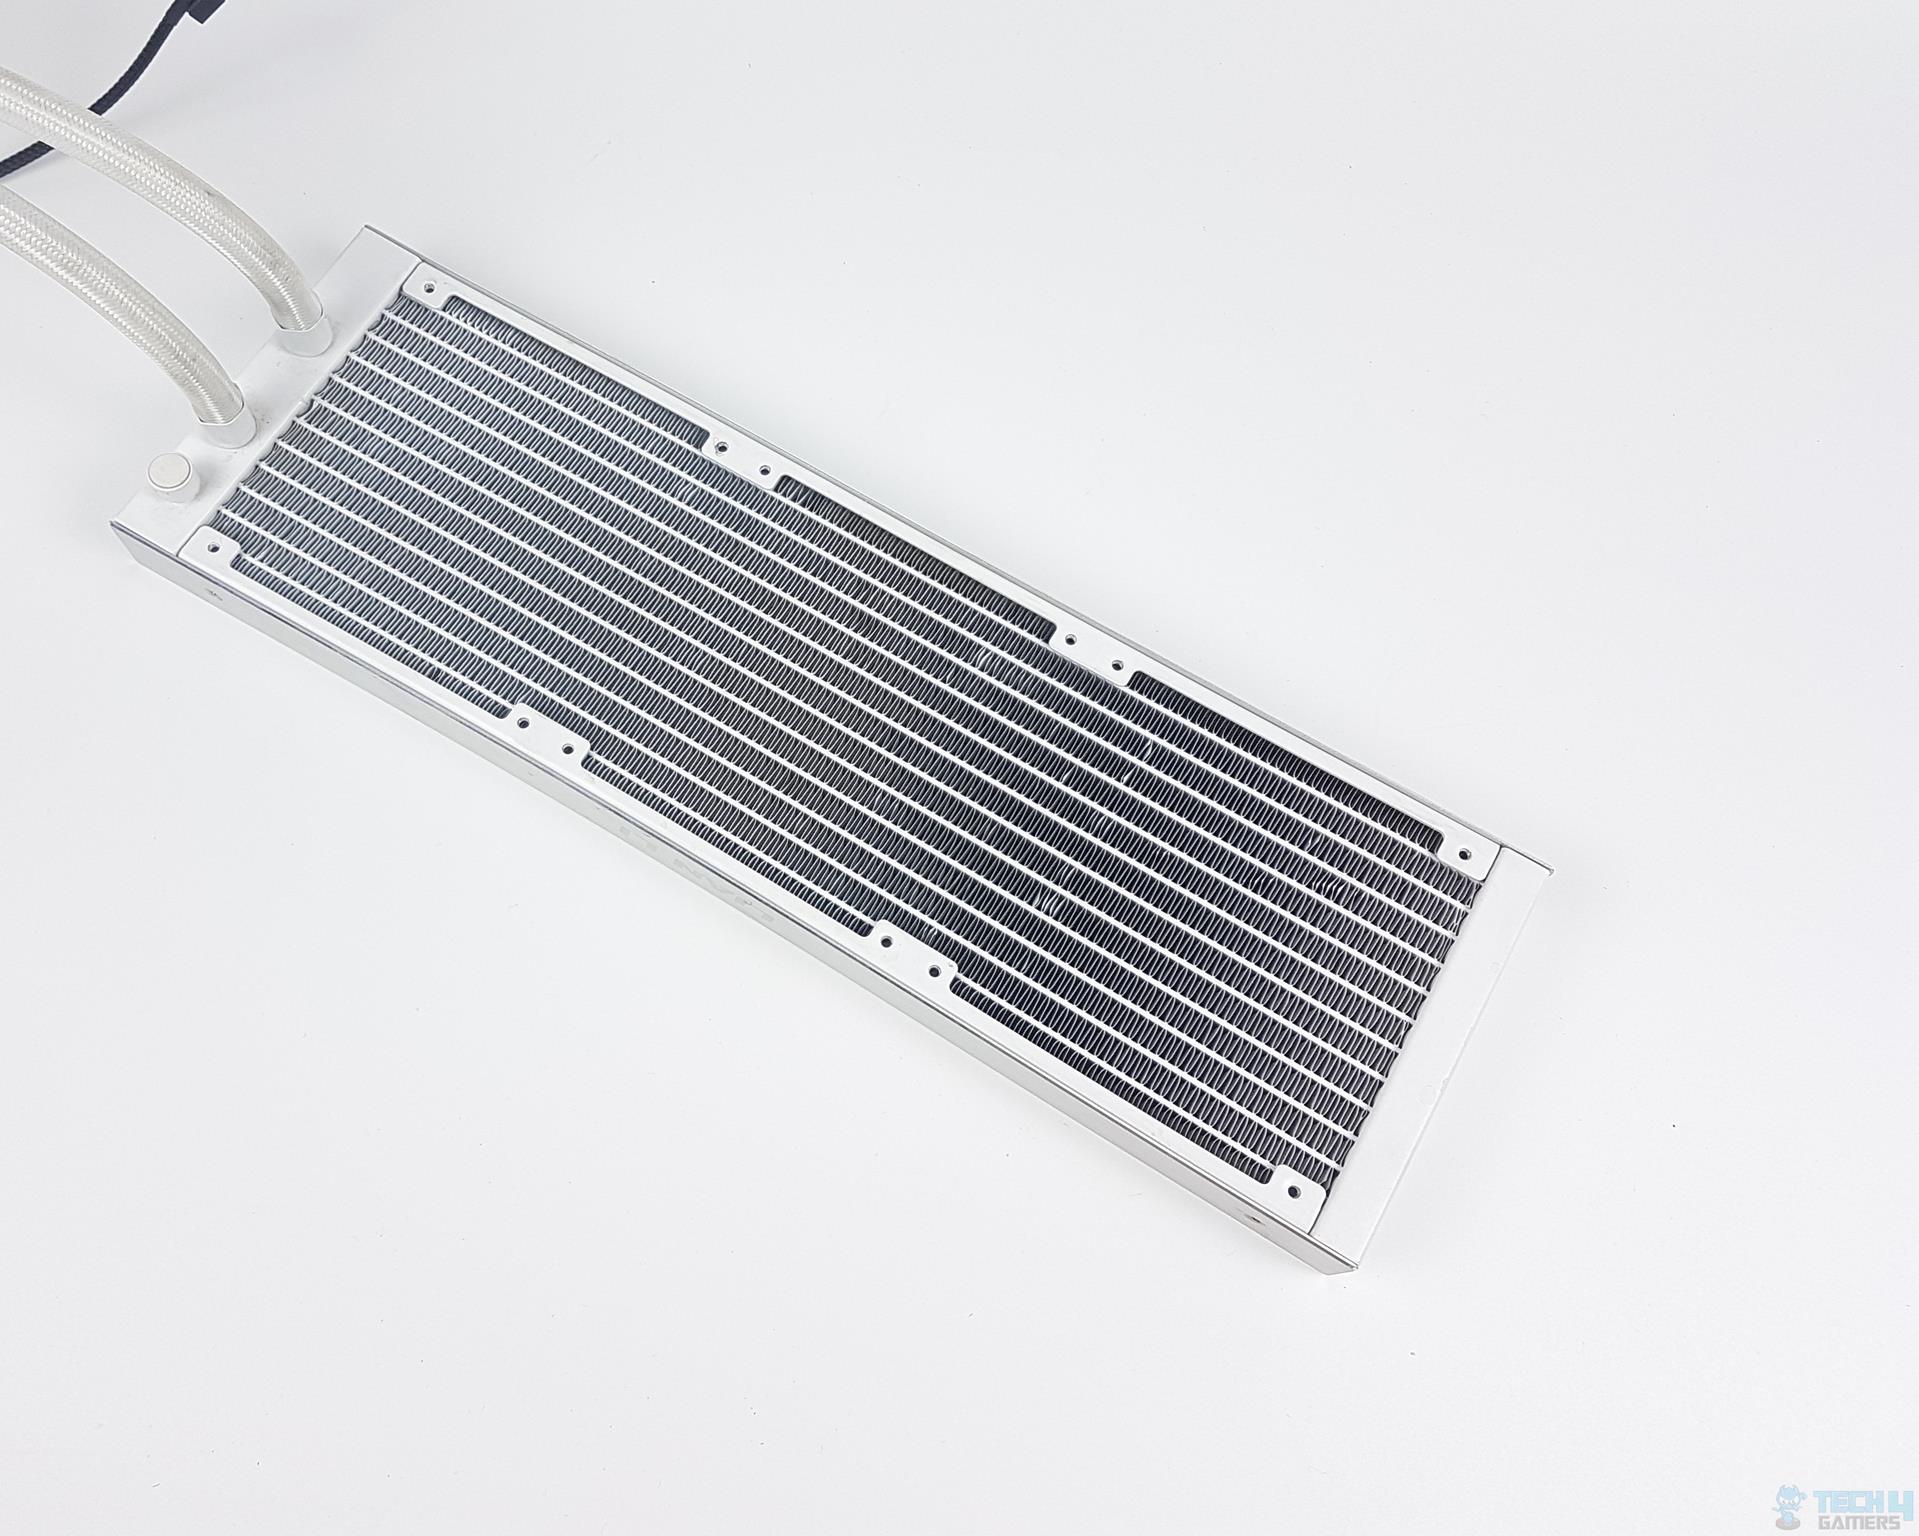 Lian Li GALAHAD 360 White Cooler — The radiator